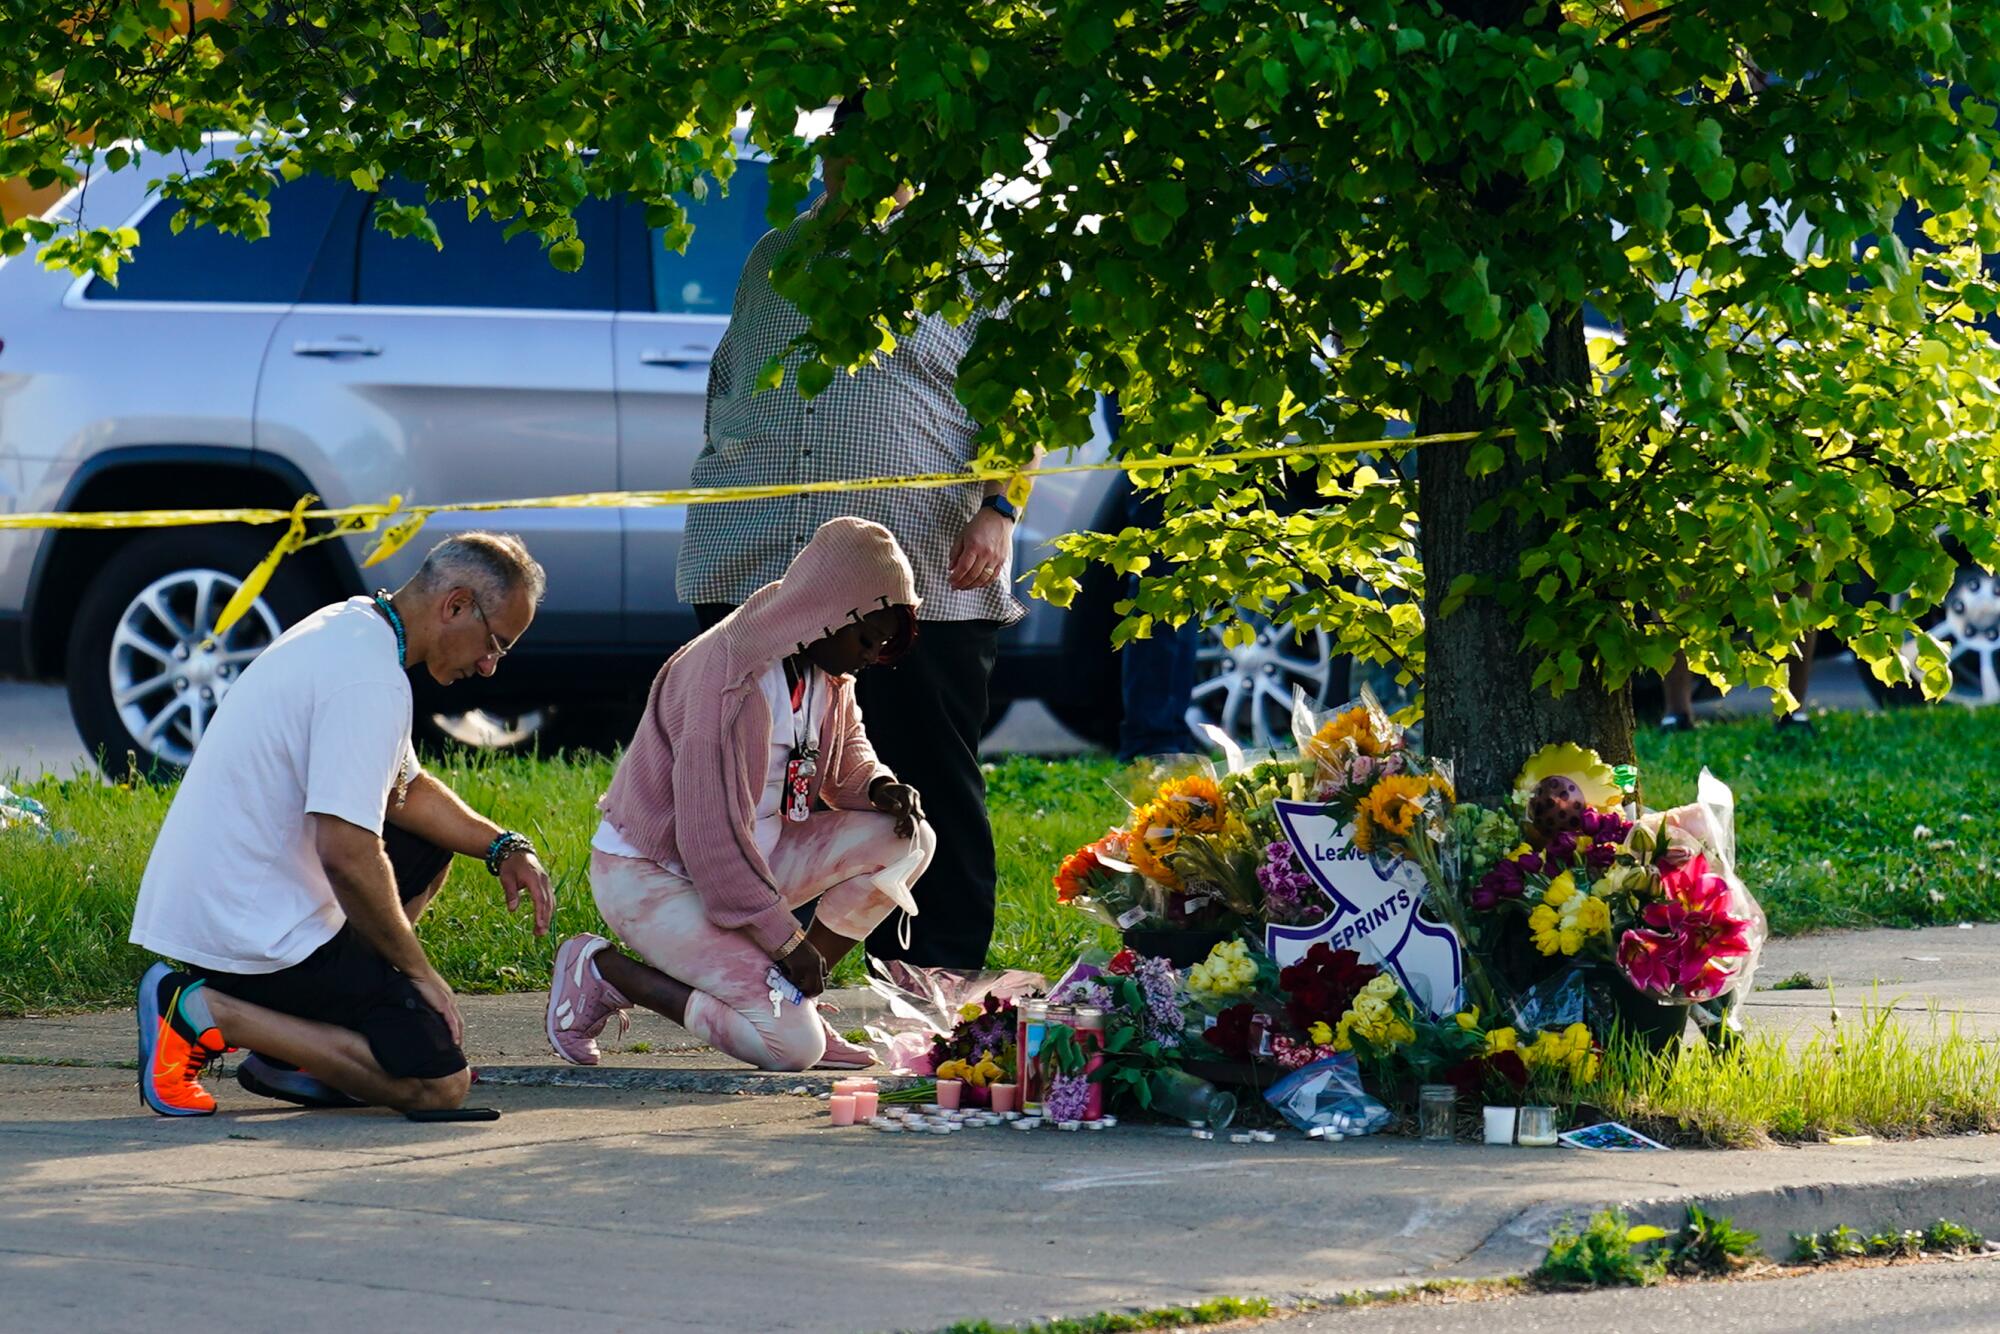 People kneel beside a sidewalk memorial of flowers near a tree and yellow police tape